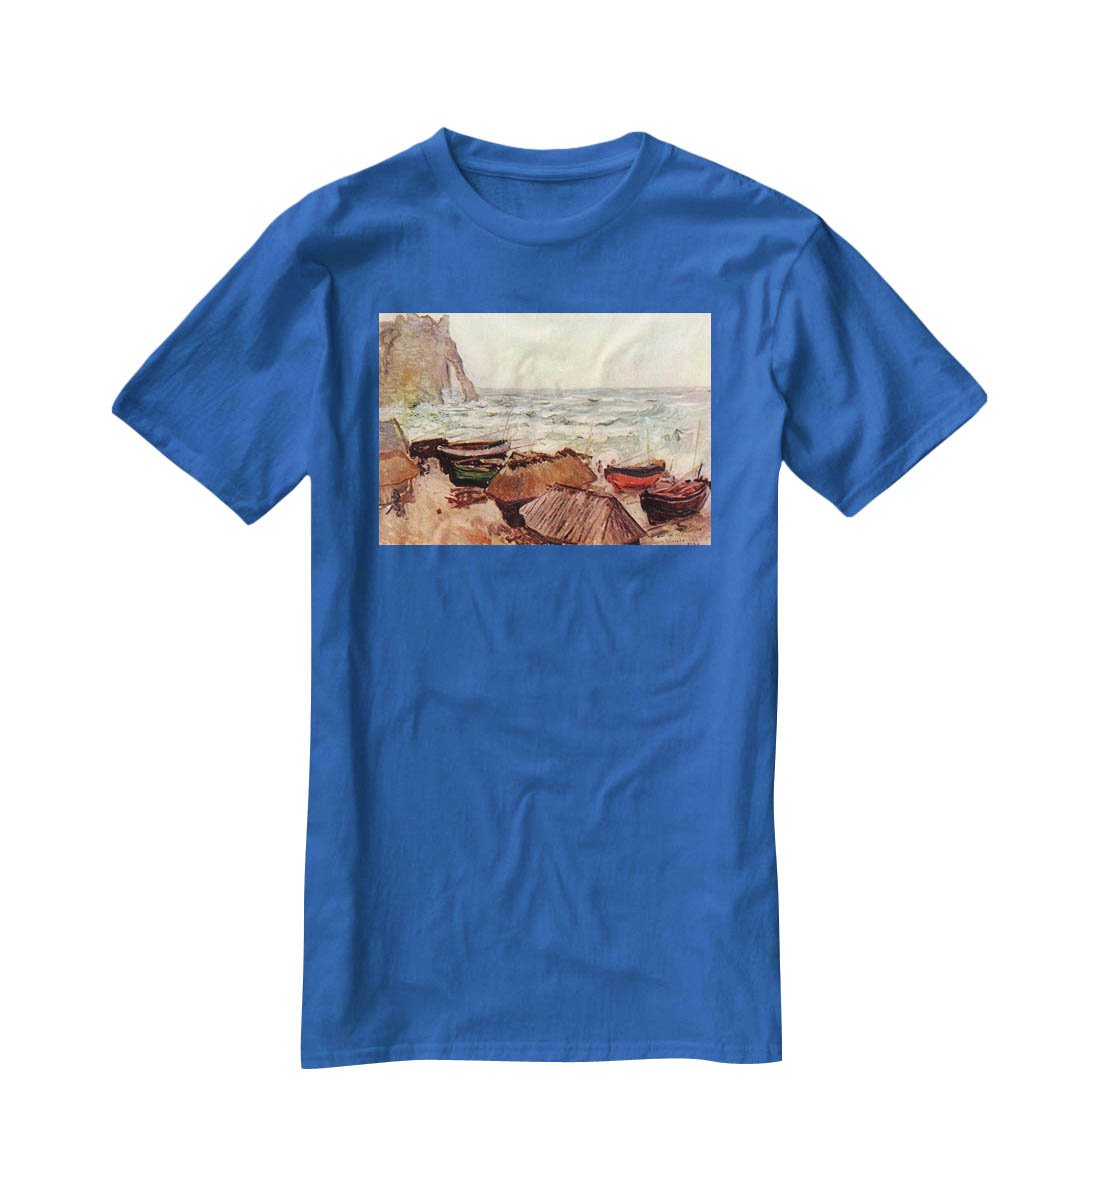 Durchbrochener rock at Etretat by Monet T-Shirt - Canvas Art Rocks - 2